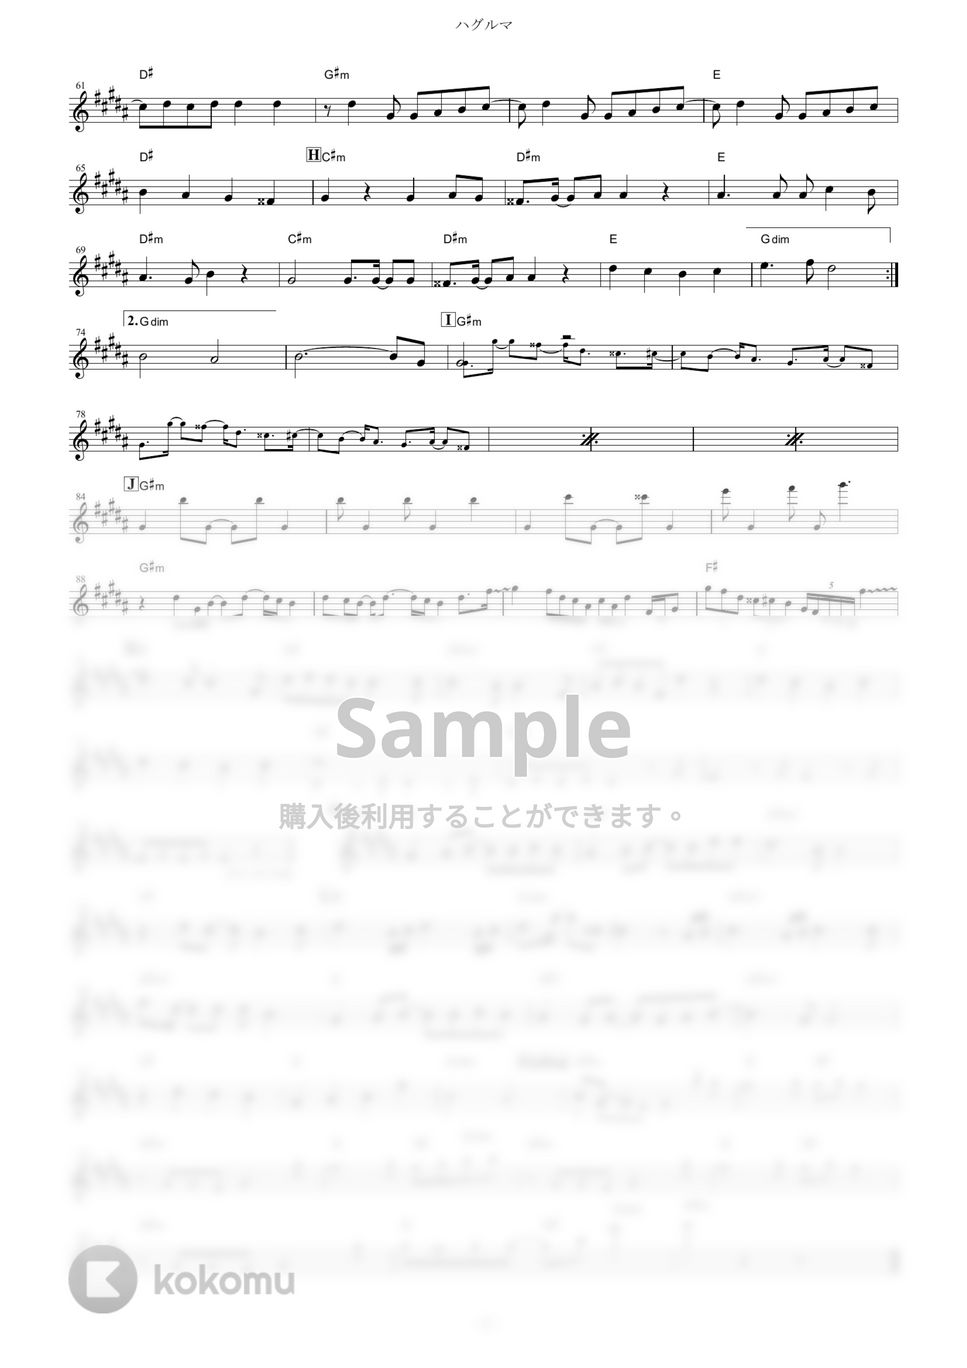 KANA-BOON - ハグルマ (『からくりサーカス』 / in Eb) by muta-sax